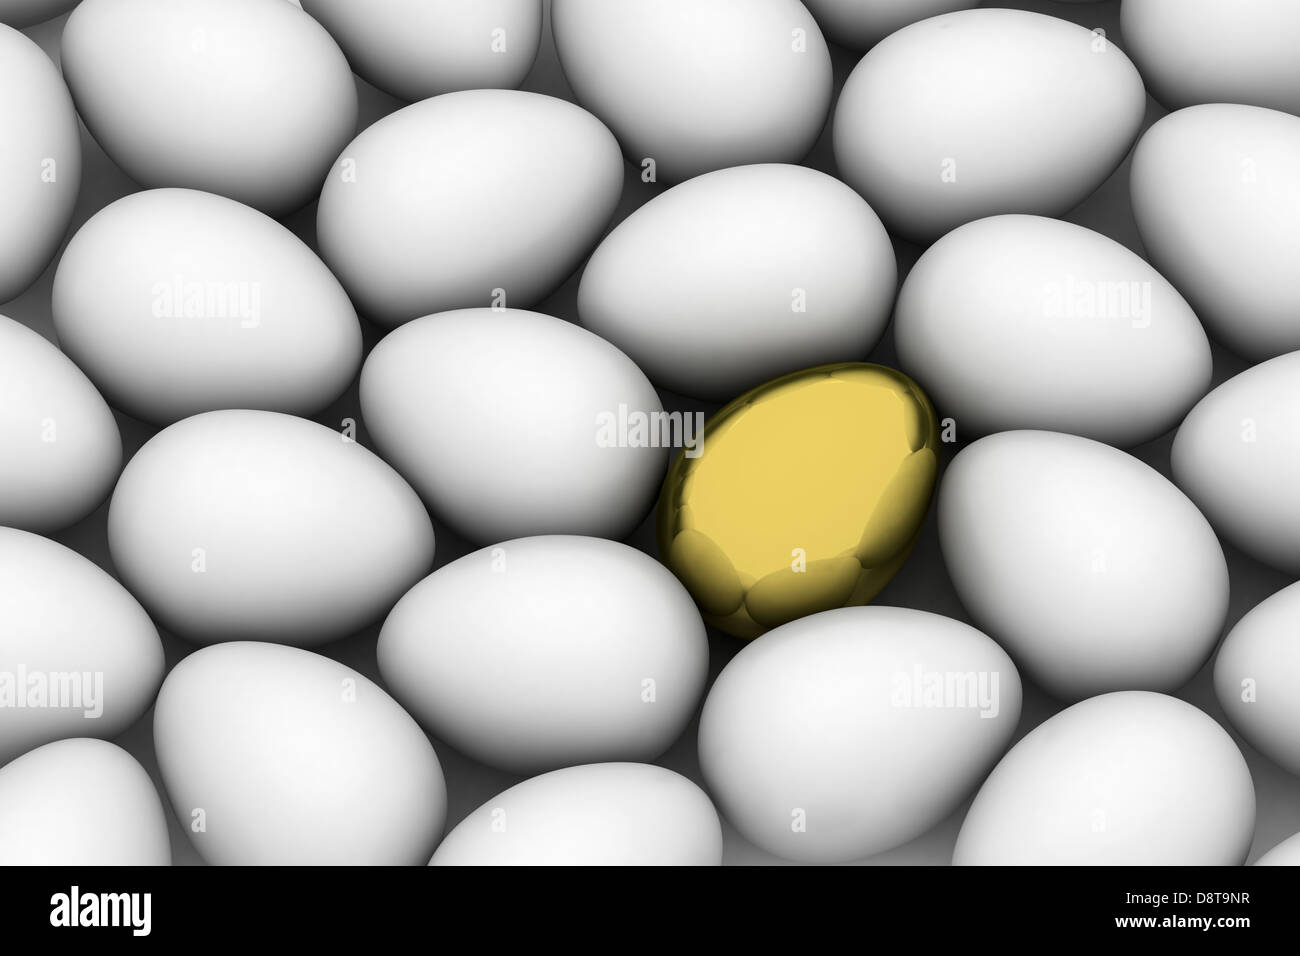 Huevo de pascua de oro entre huevos blancos similares Foto de stock